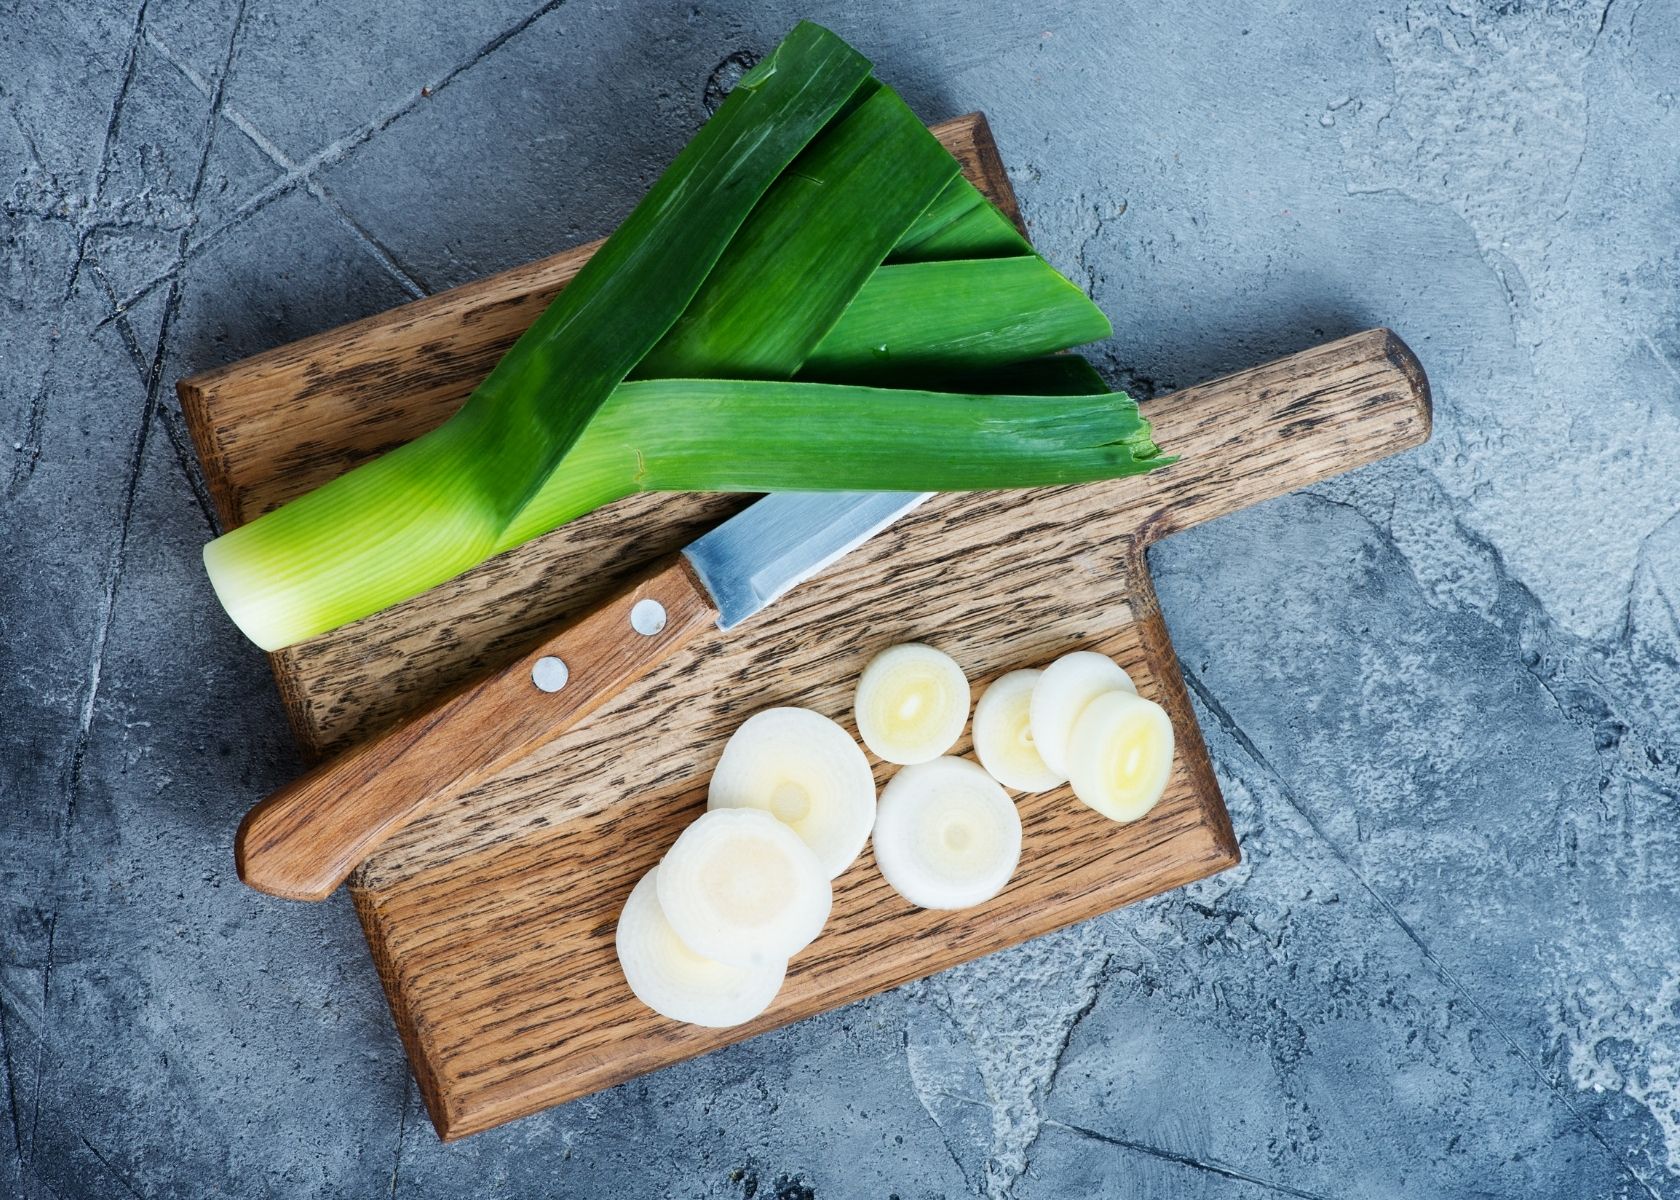 Fresh leek stalk next to cut leek slices on wooden cutting board.